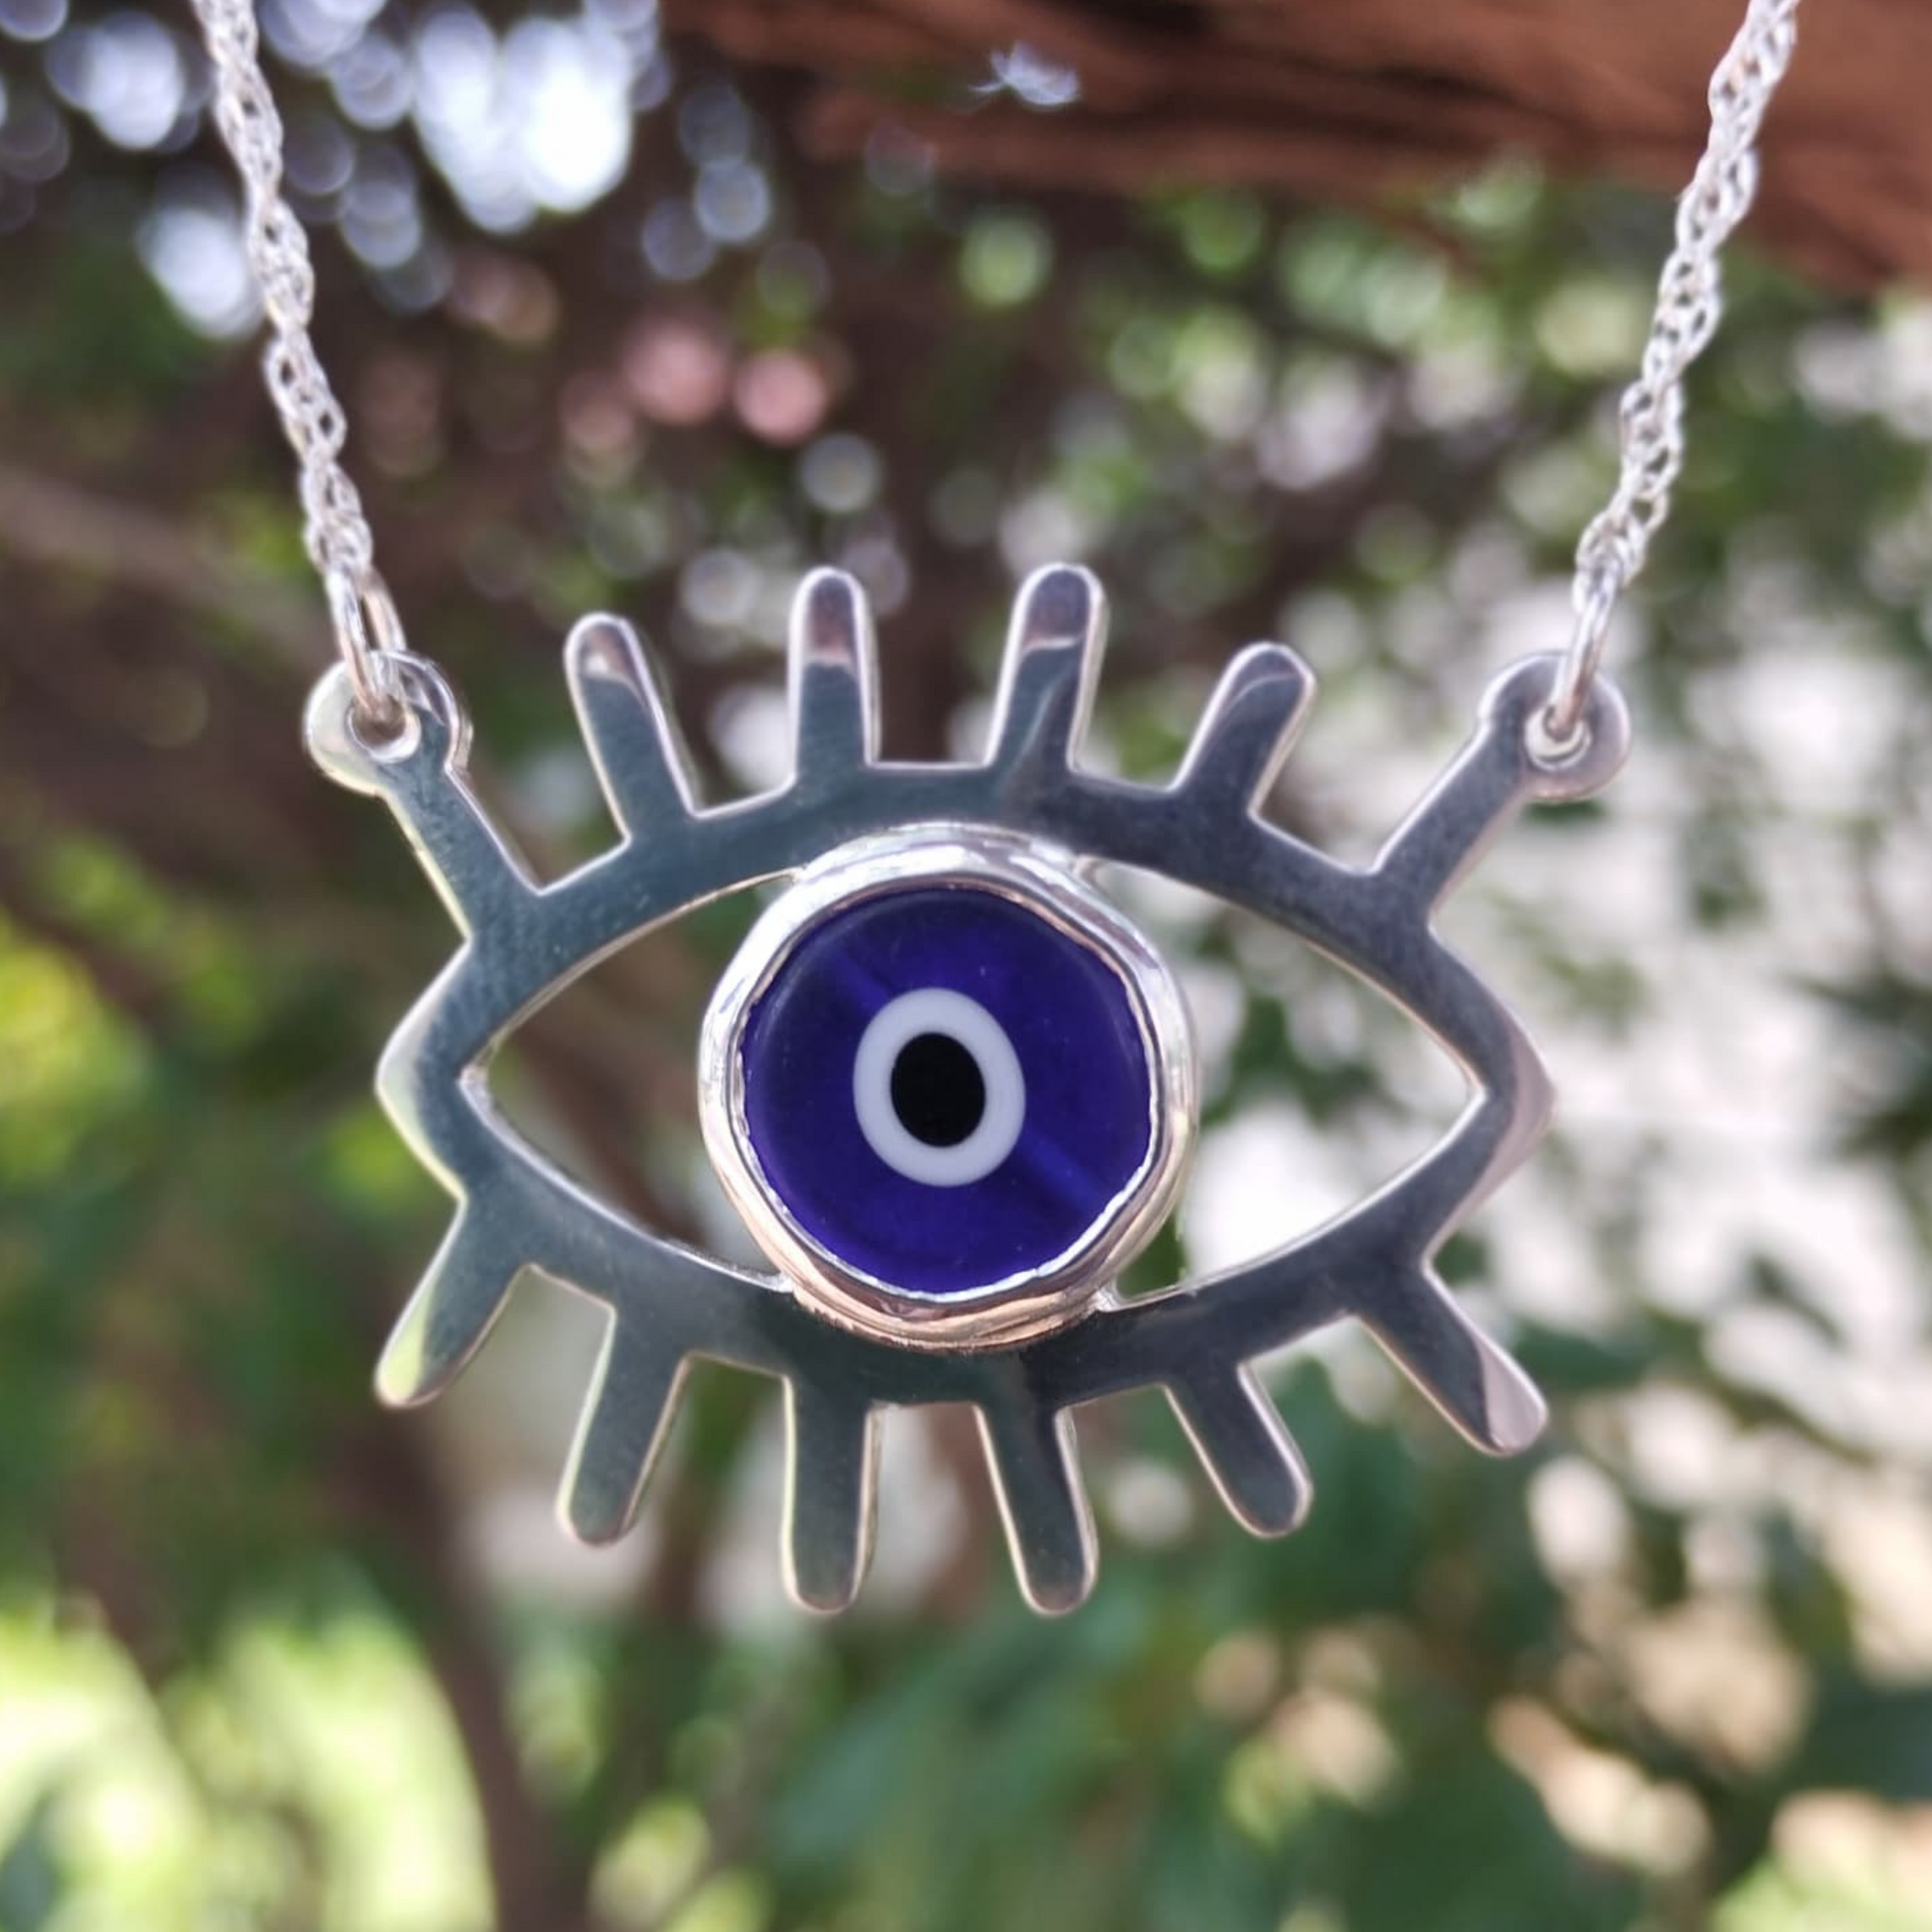 Blue evil eye necklace made in Zimbabwe